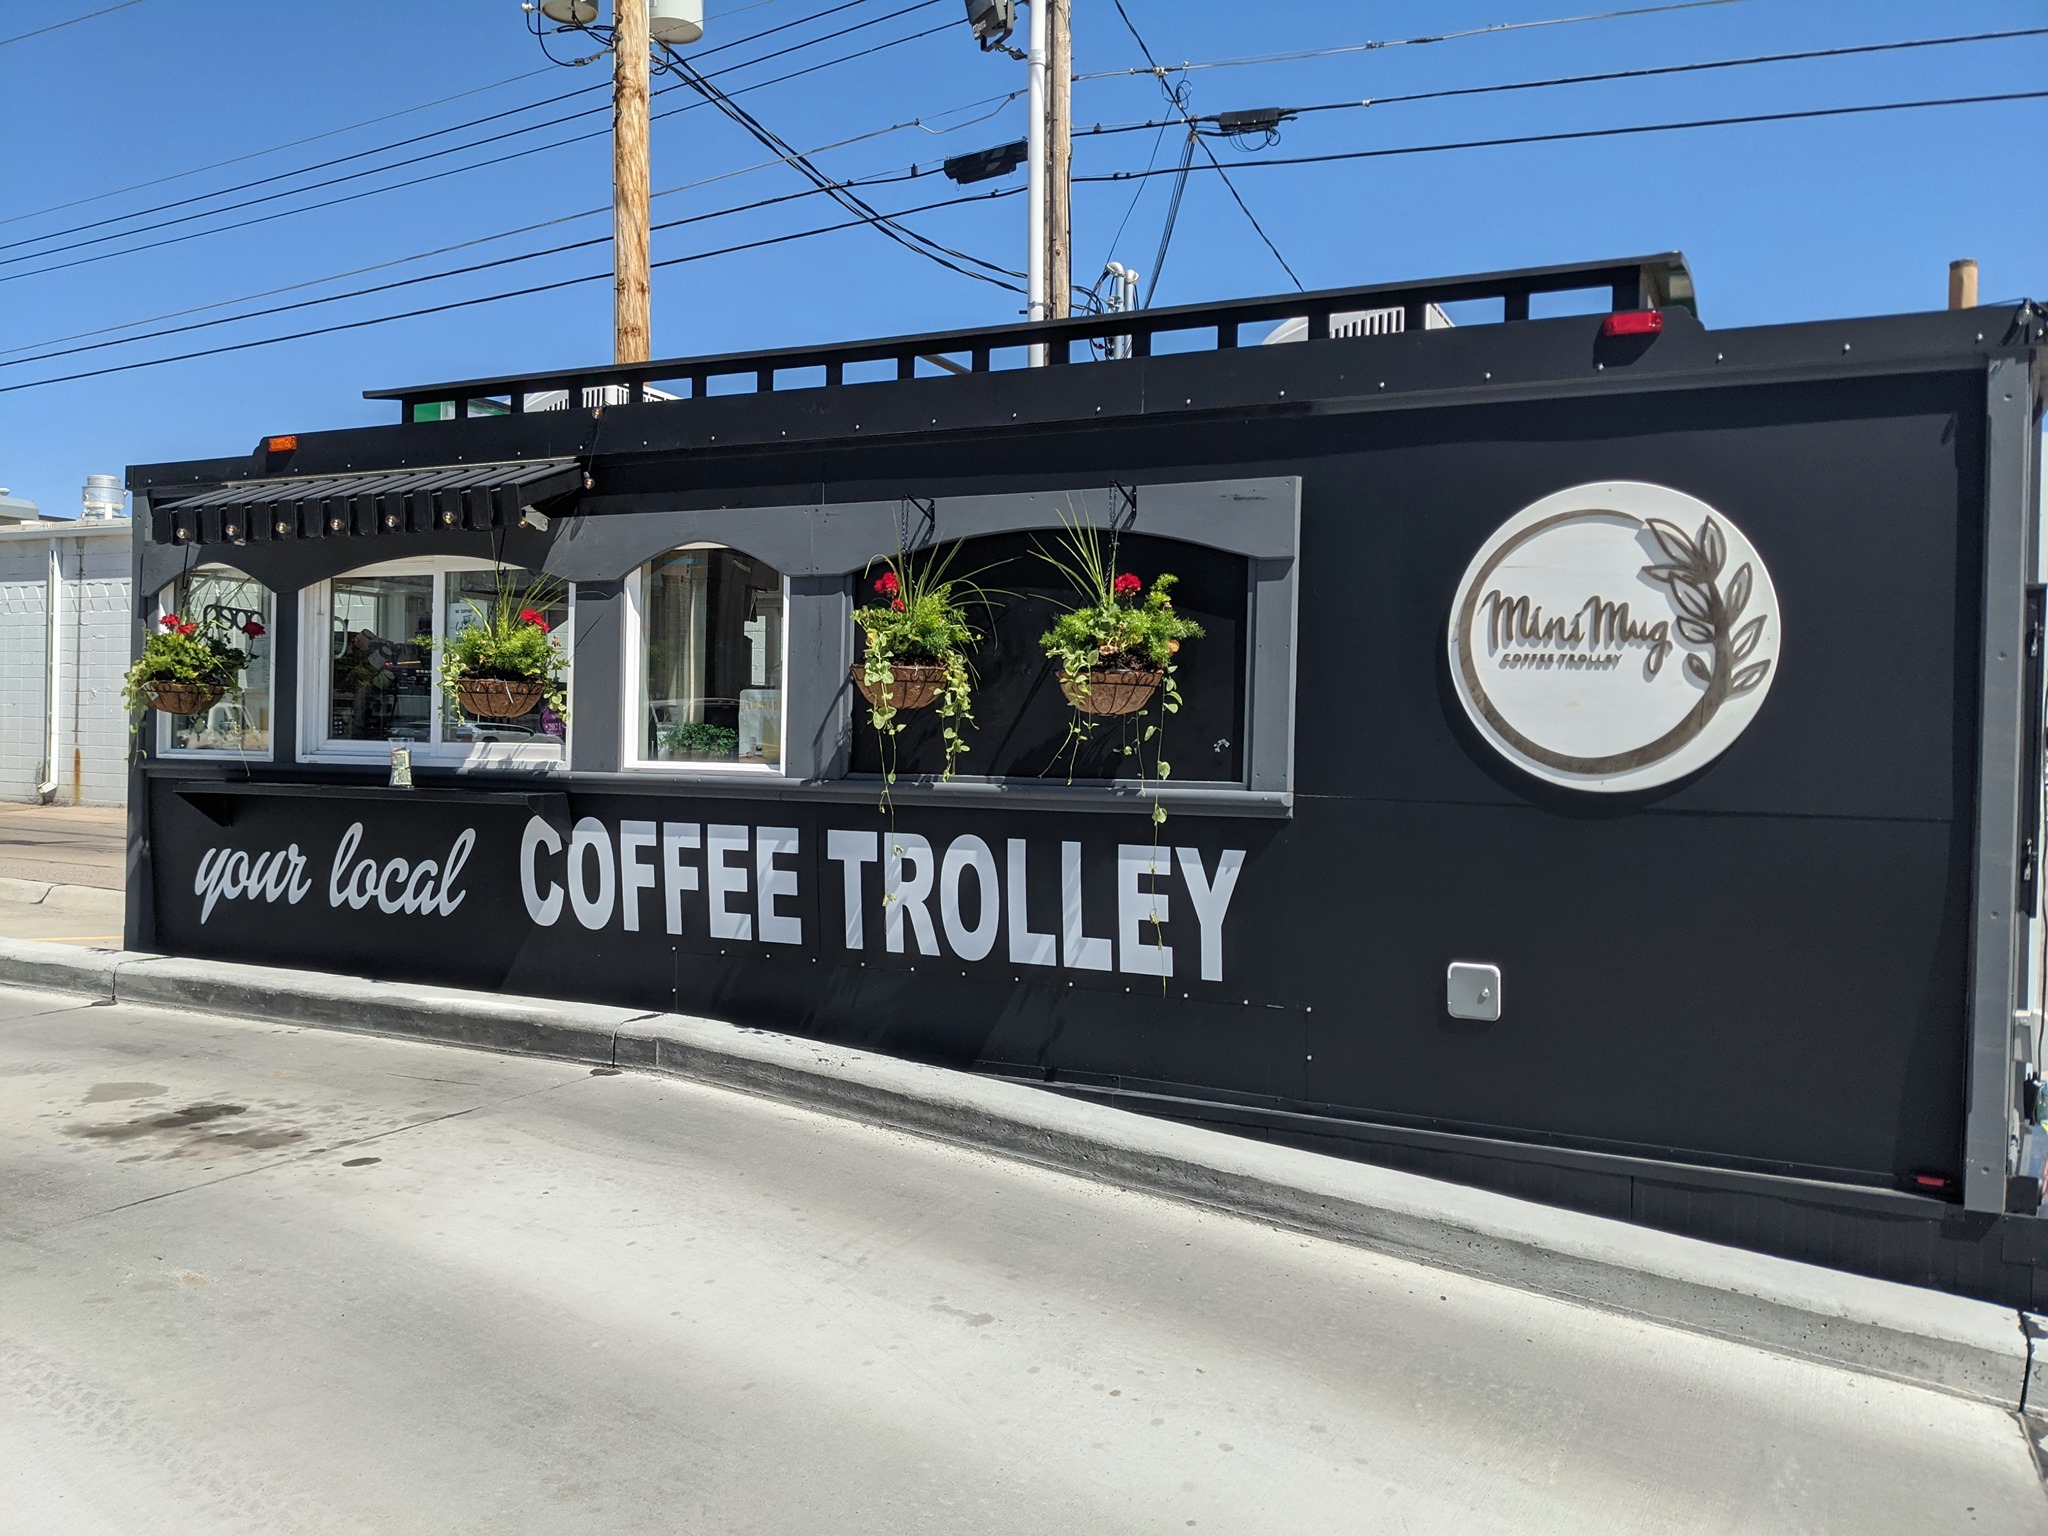 The Mini Mug Coffee Trolley in Columbus, Nebraska